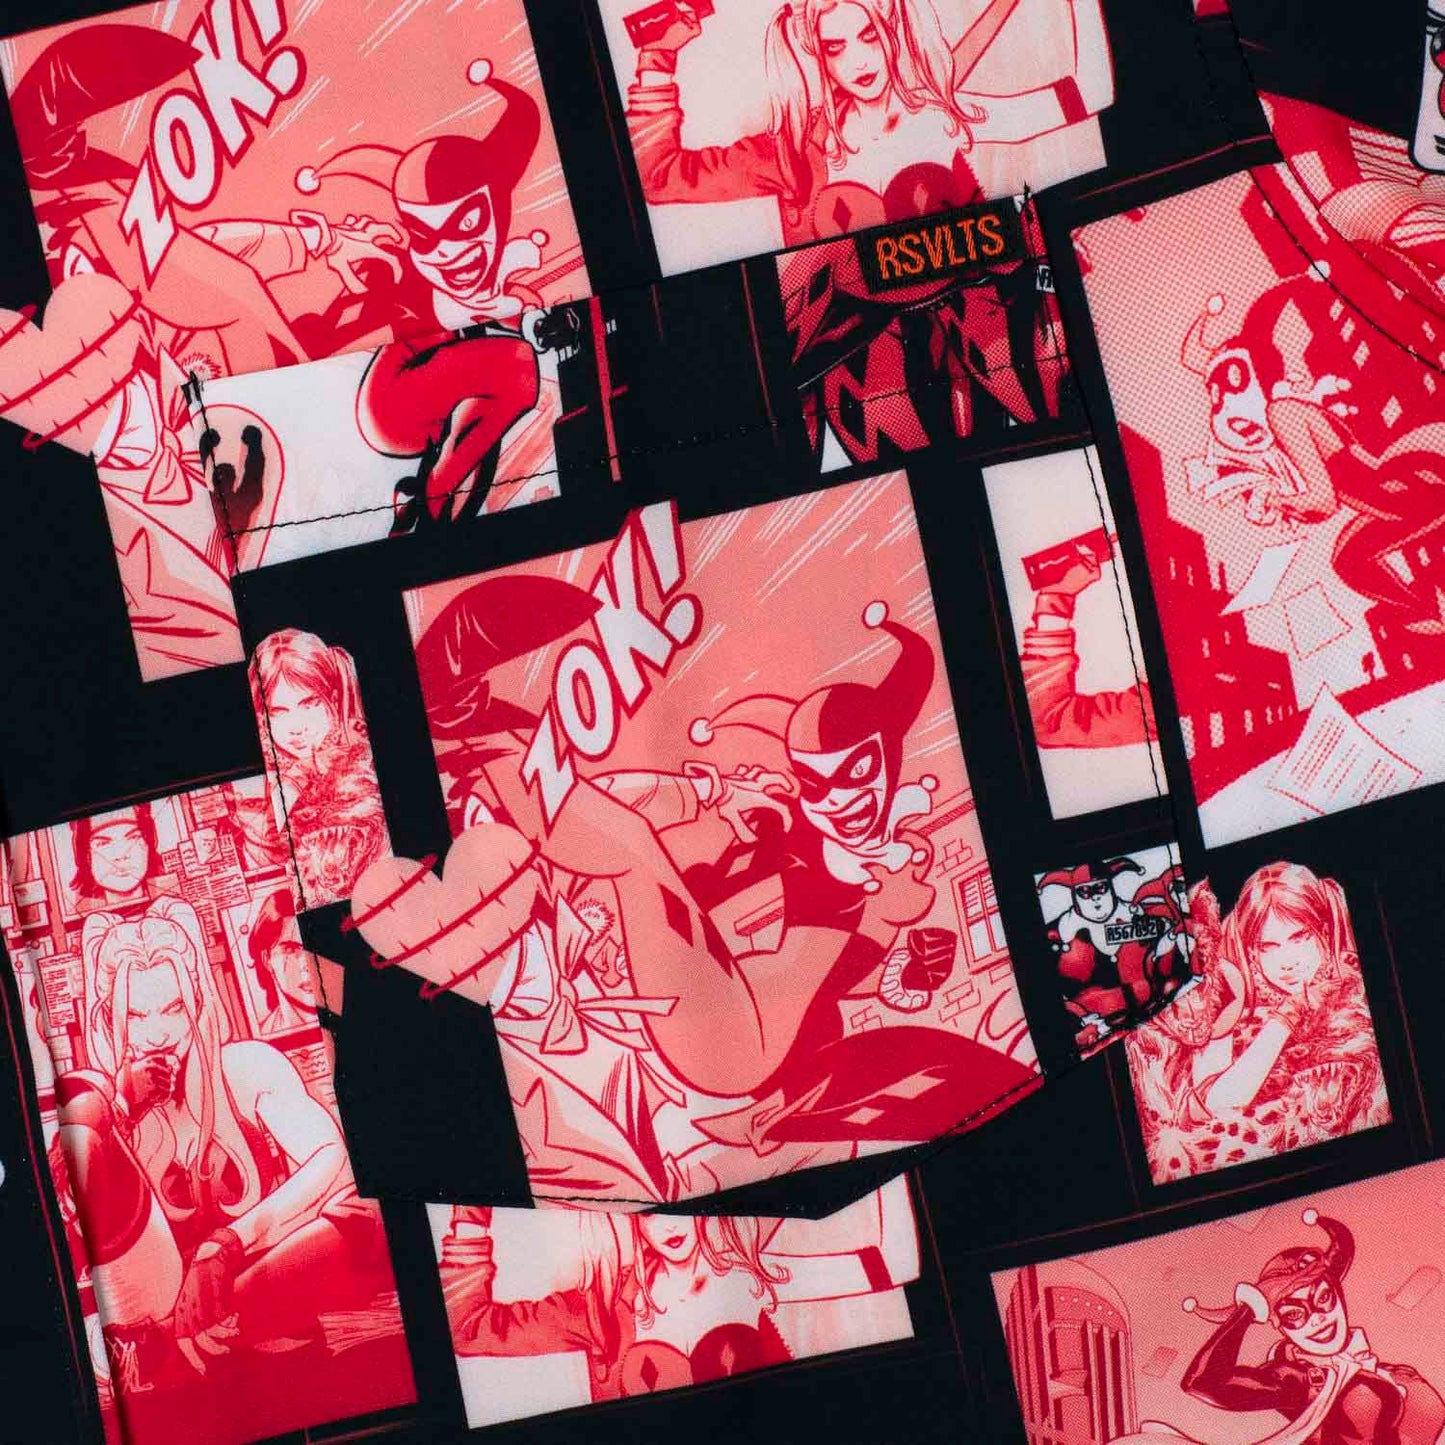 Harley Quinn "XOXO" Short Sleeve Shirt